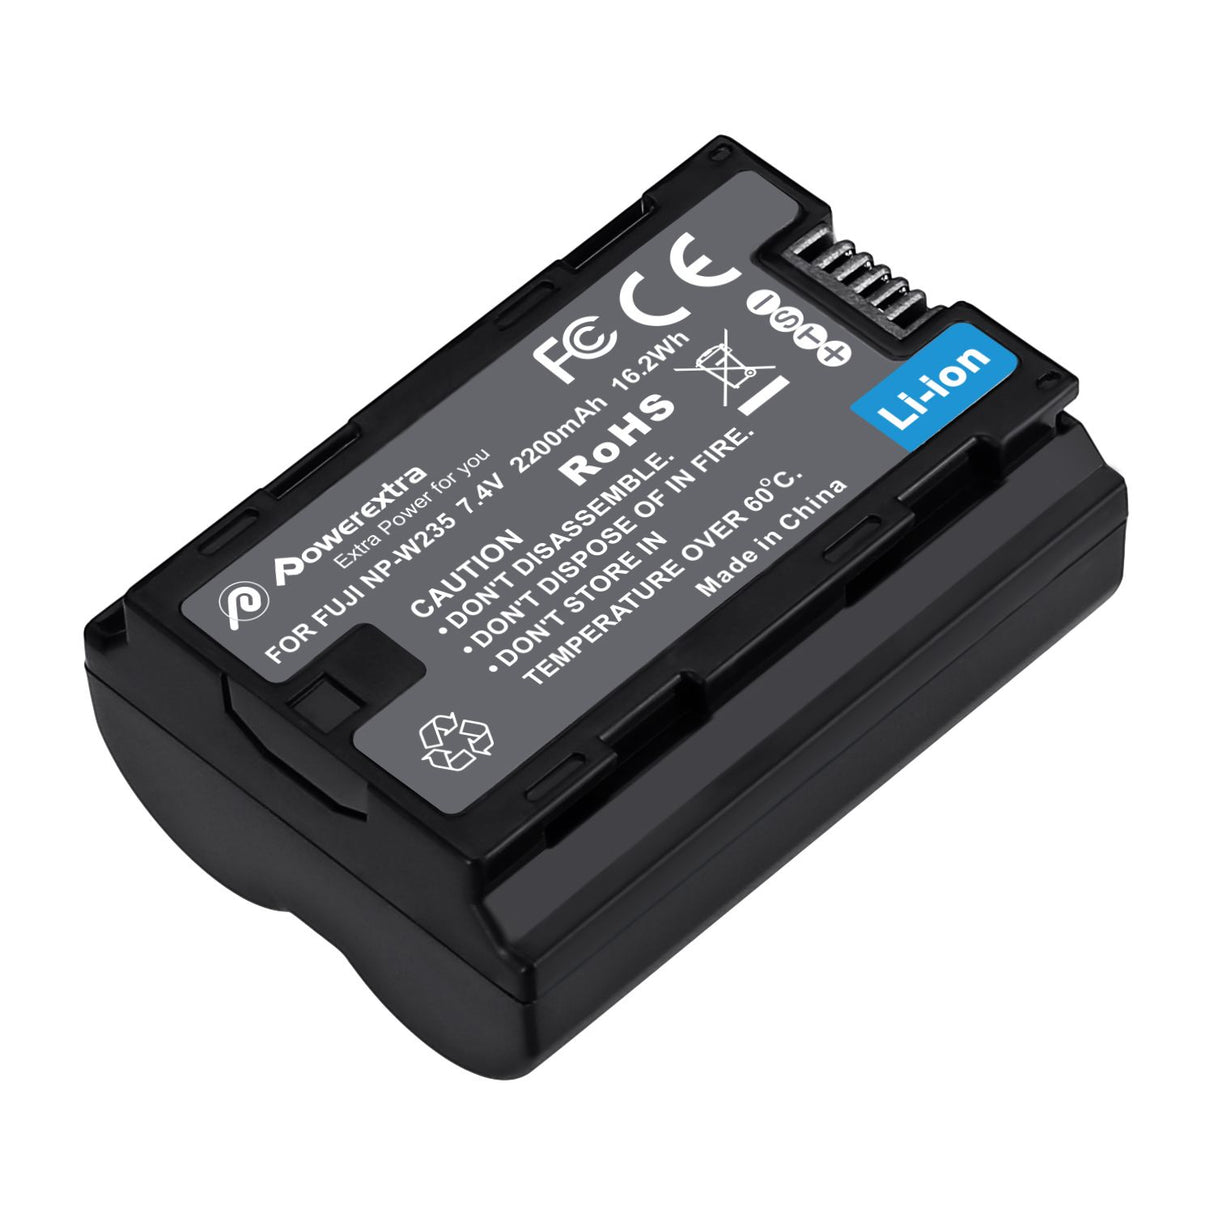 Powerextra NP-W235 battery